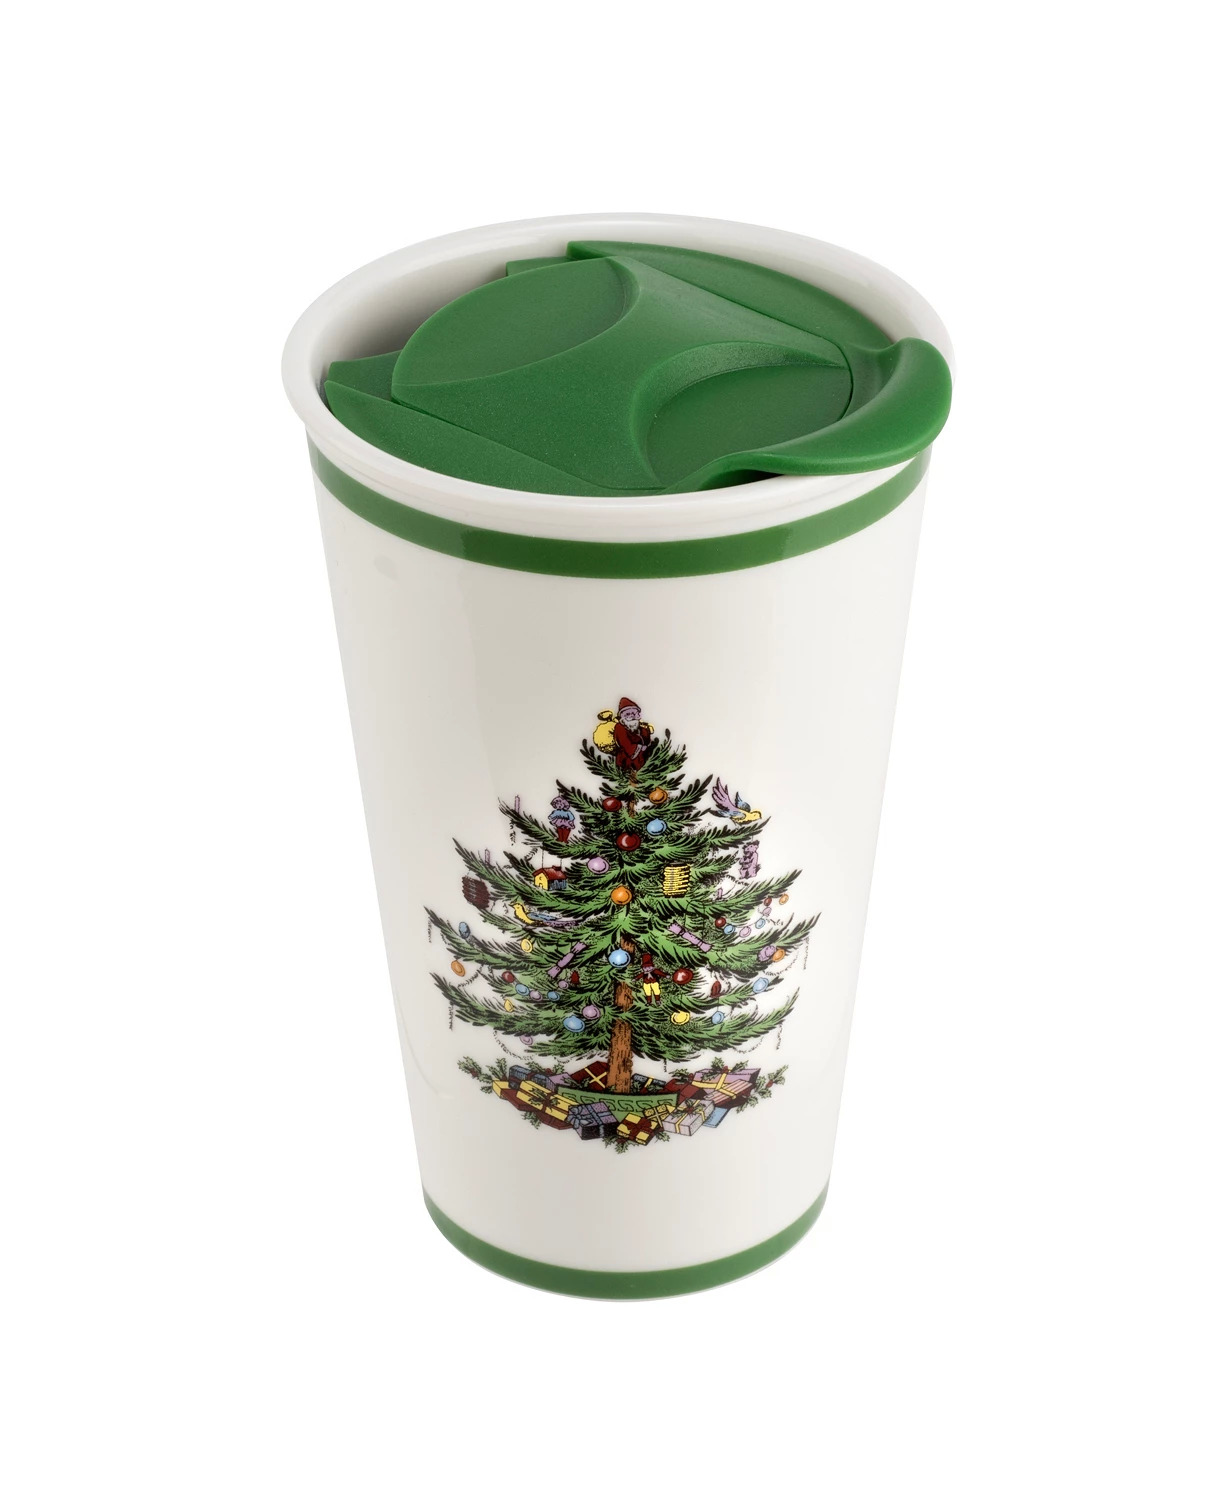 11oz Spode Christmas Tree Porcelain Travel Mug $7, 5-Piece Spode 2021 Mug, Tin & Coaster Set $14 & More + 20% SD Cashback + Free Store Pickup at Macy's or FS on $25+